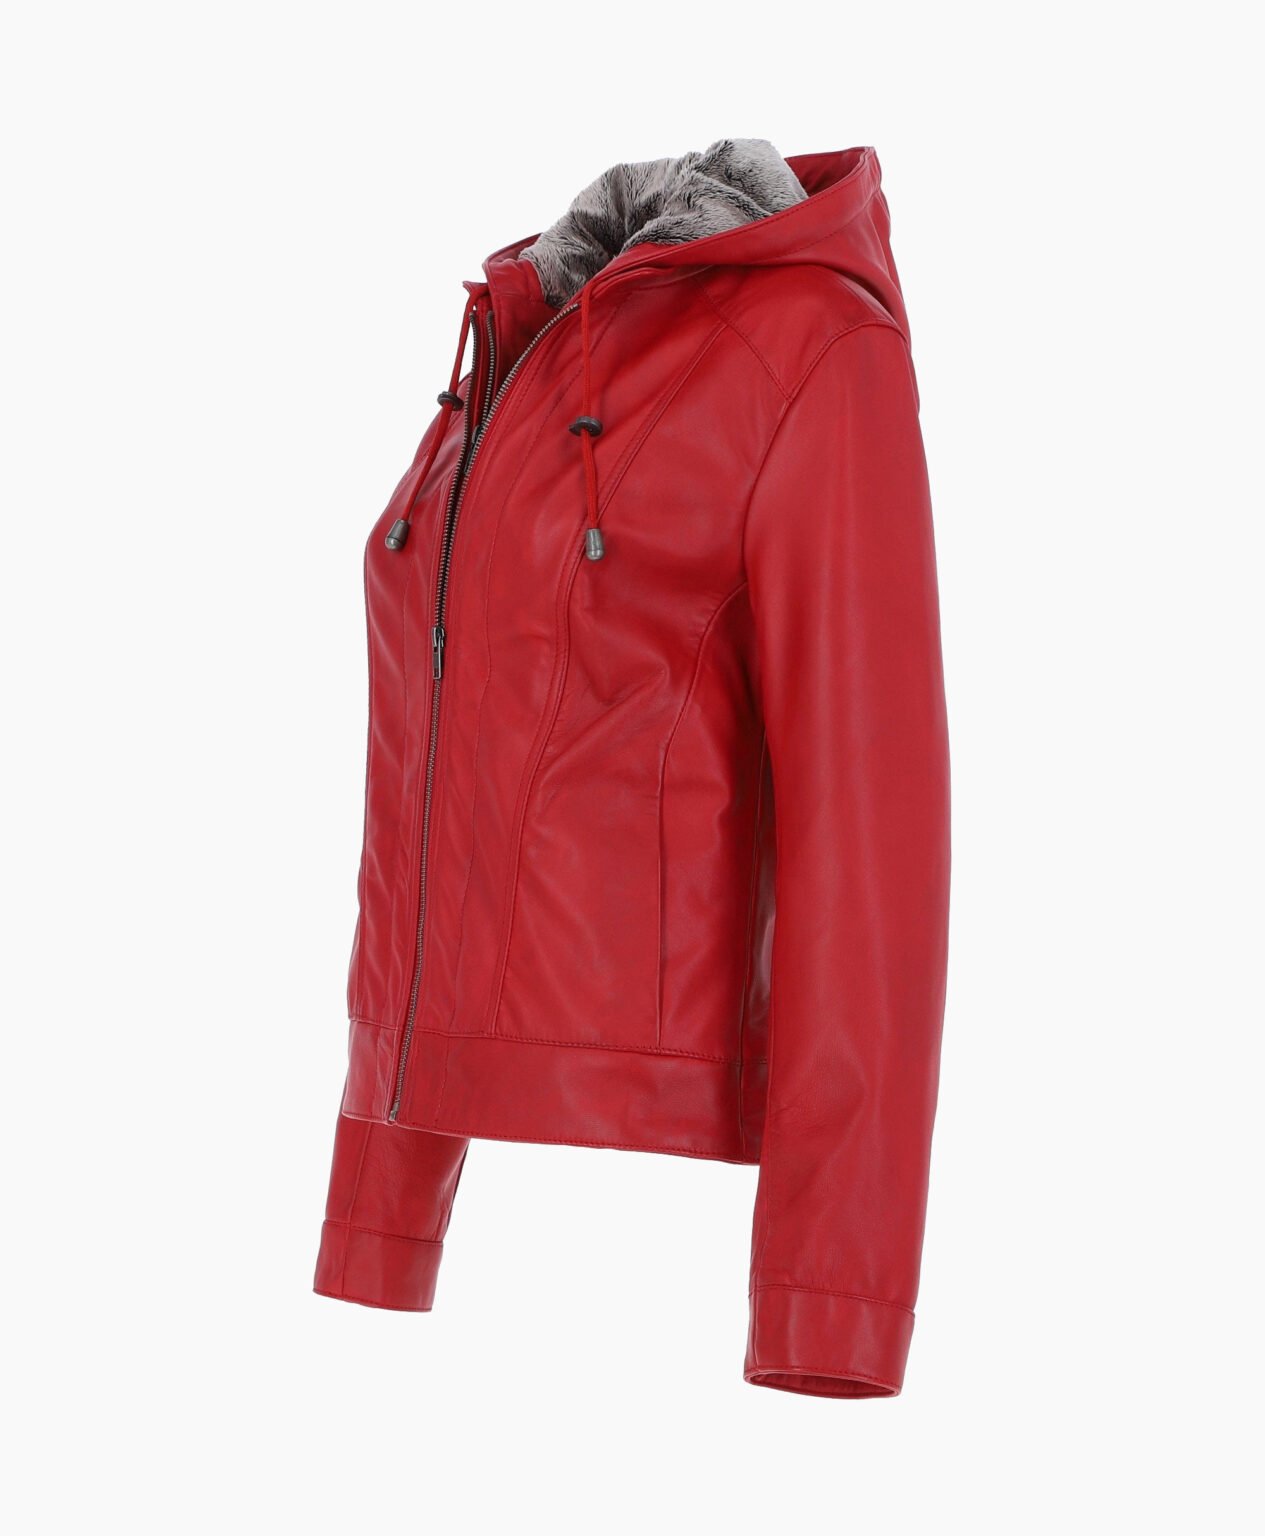 vogue-jacket-leather-hooded-jacket-red-sarasota-image201